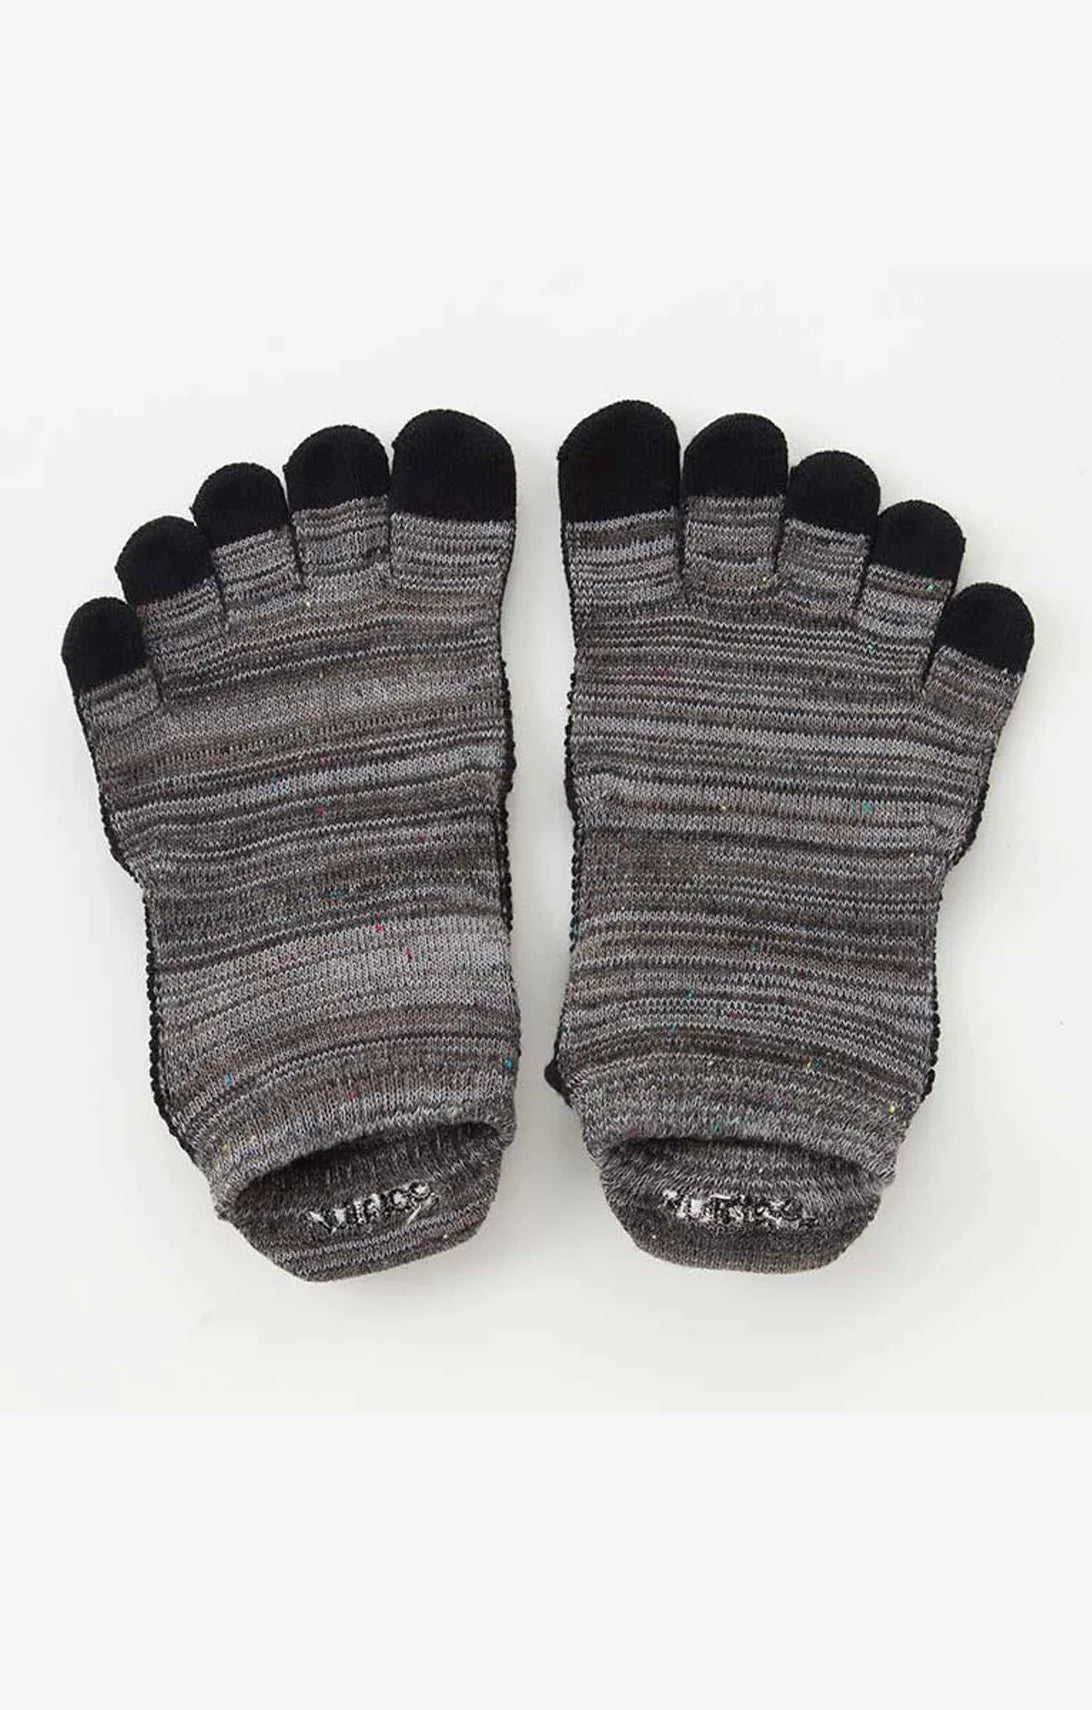 Knitido+ Umi Non-Slip Pilates and Yoga Toe Socks, With Arch